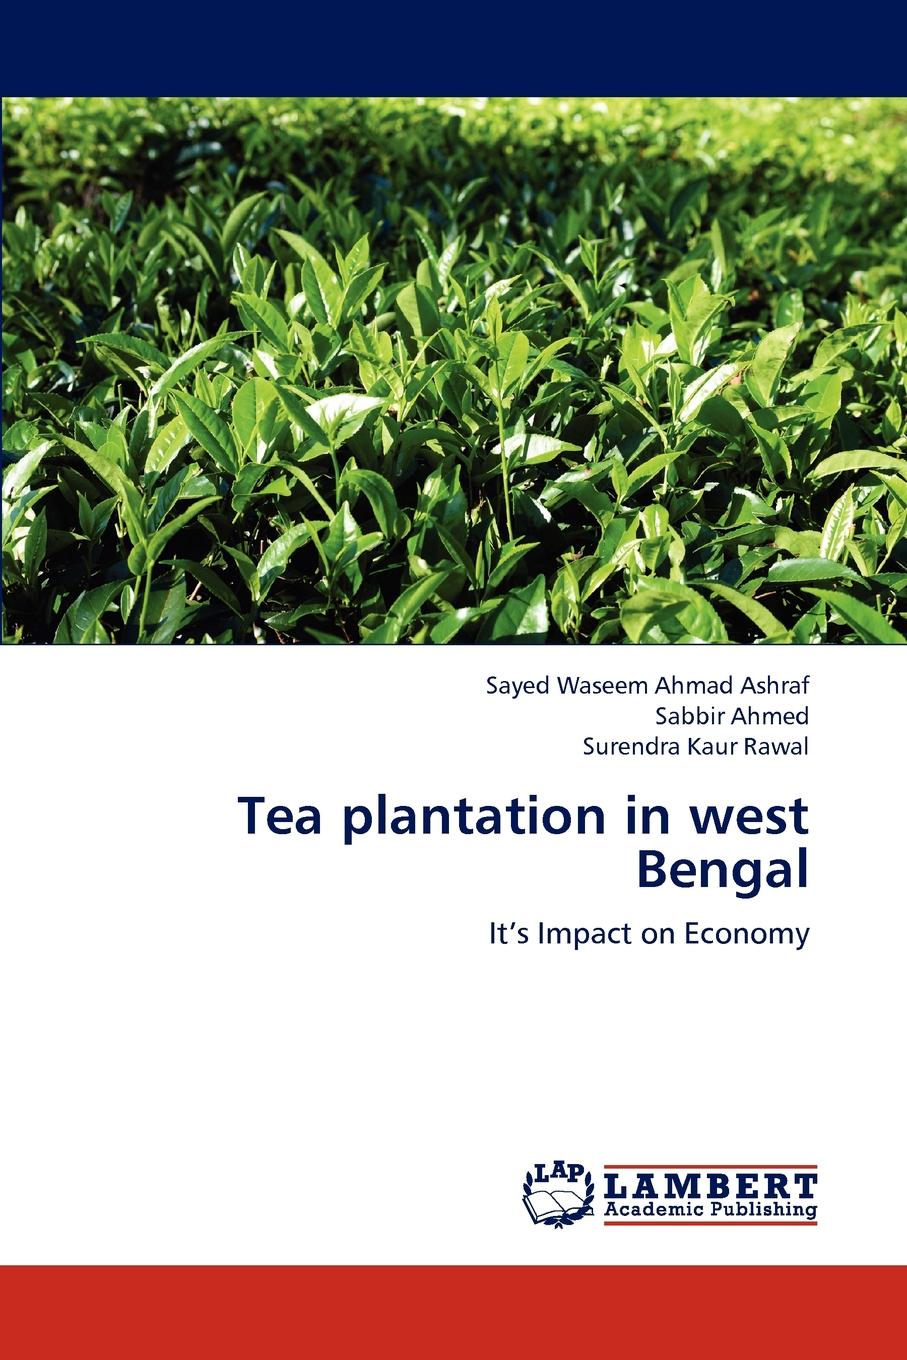 Tea Plantation in West Bengal